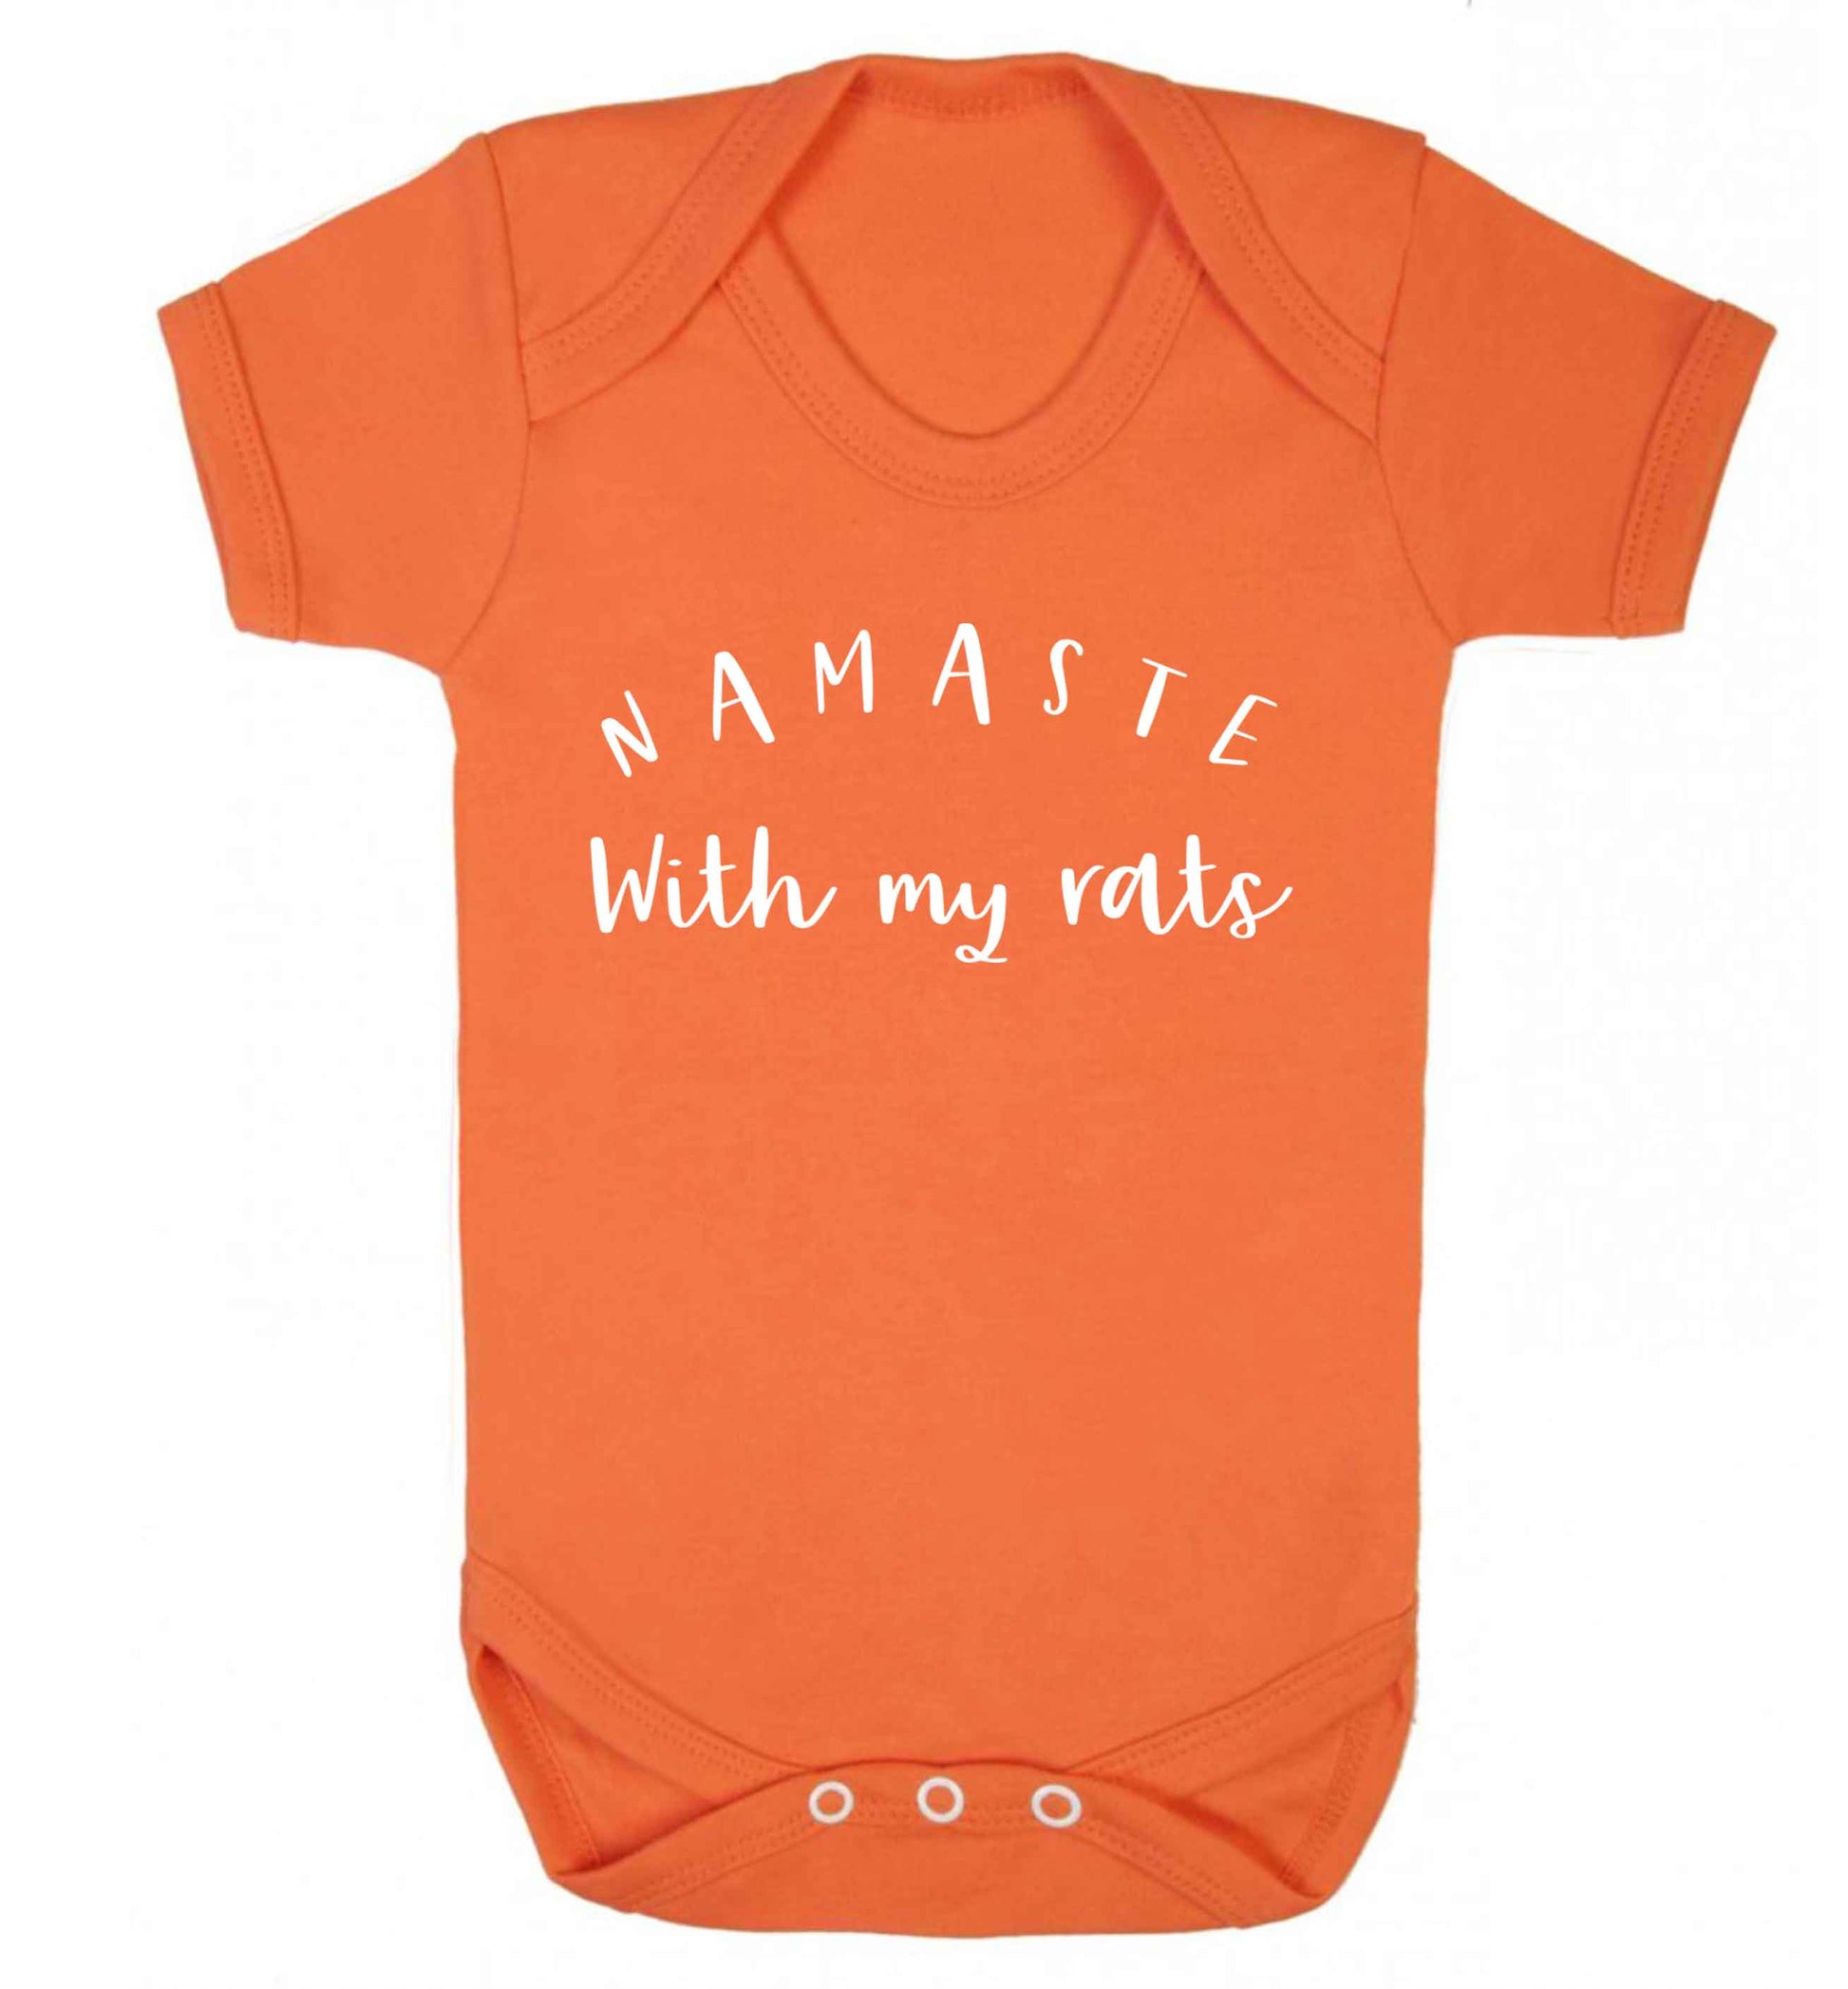 Namaste with my rats Baby Vest orange 18-24 months